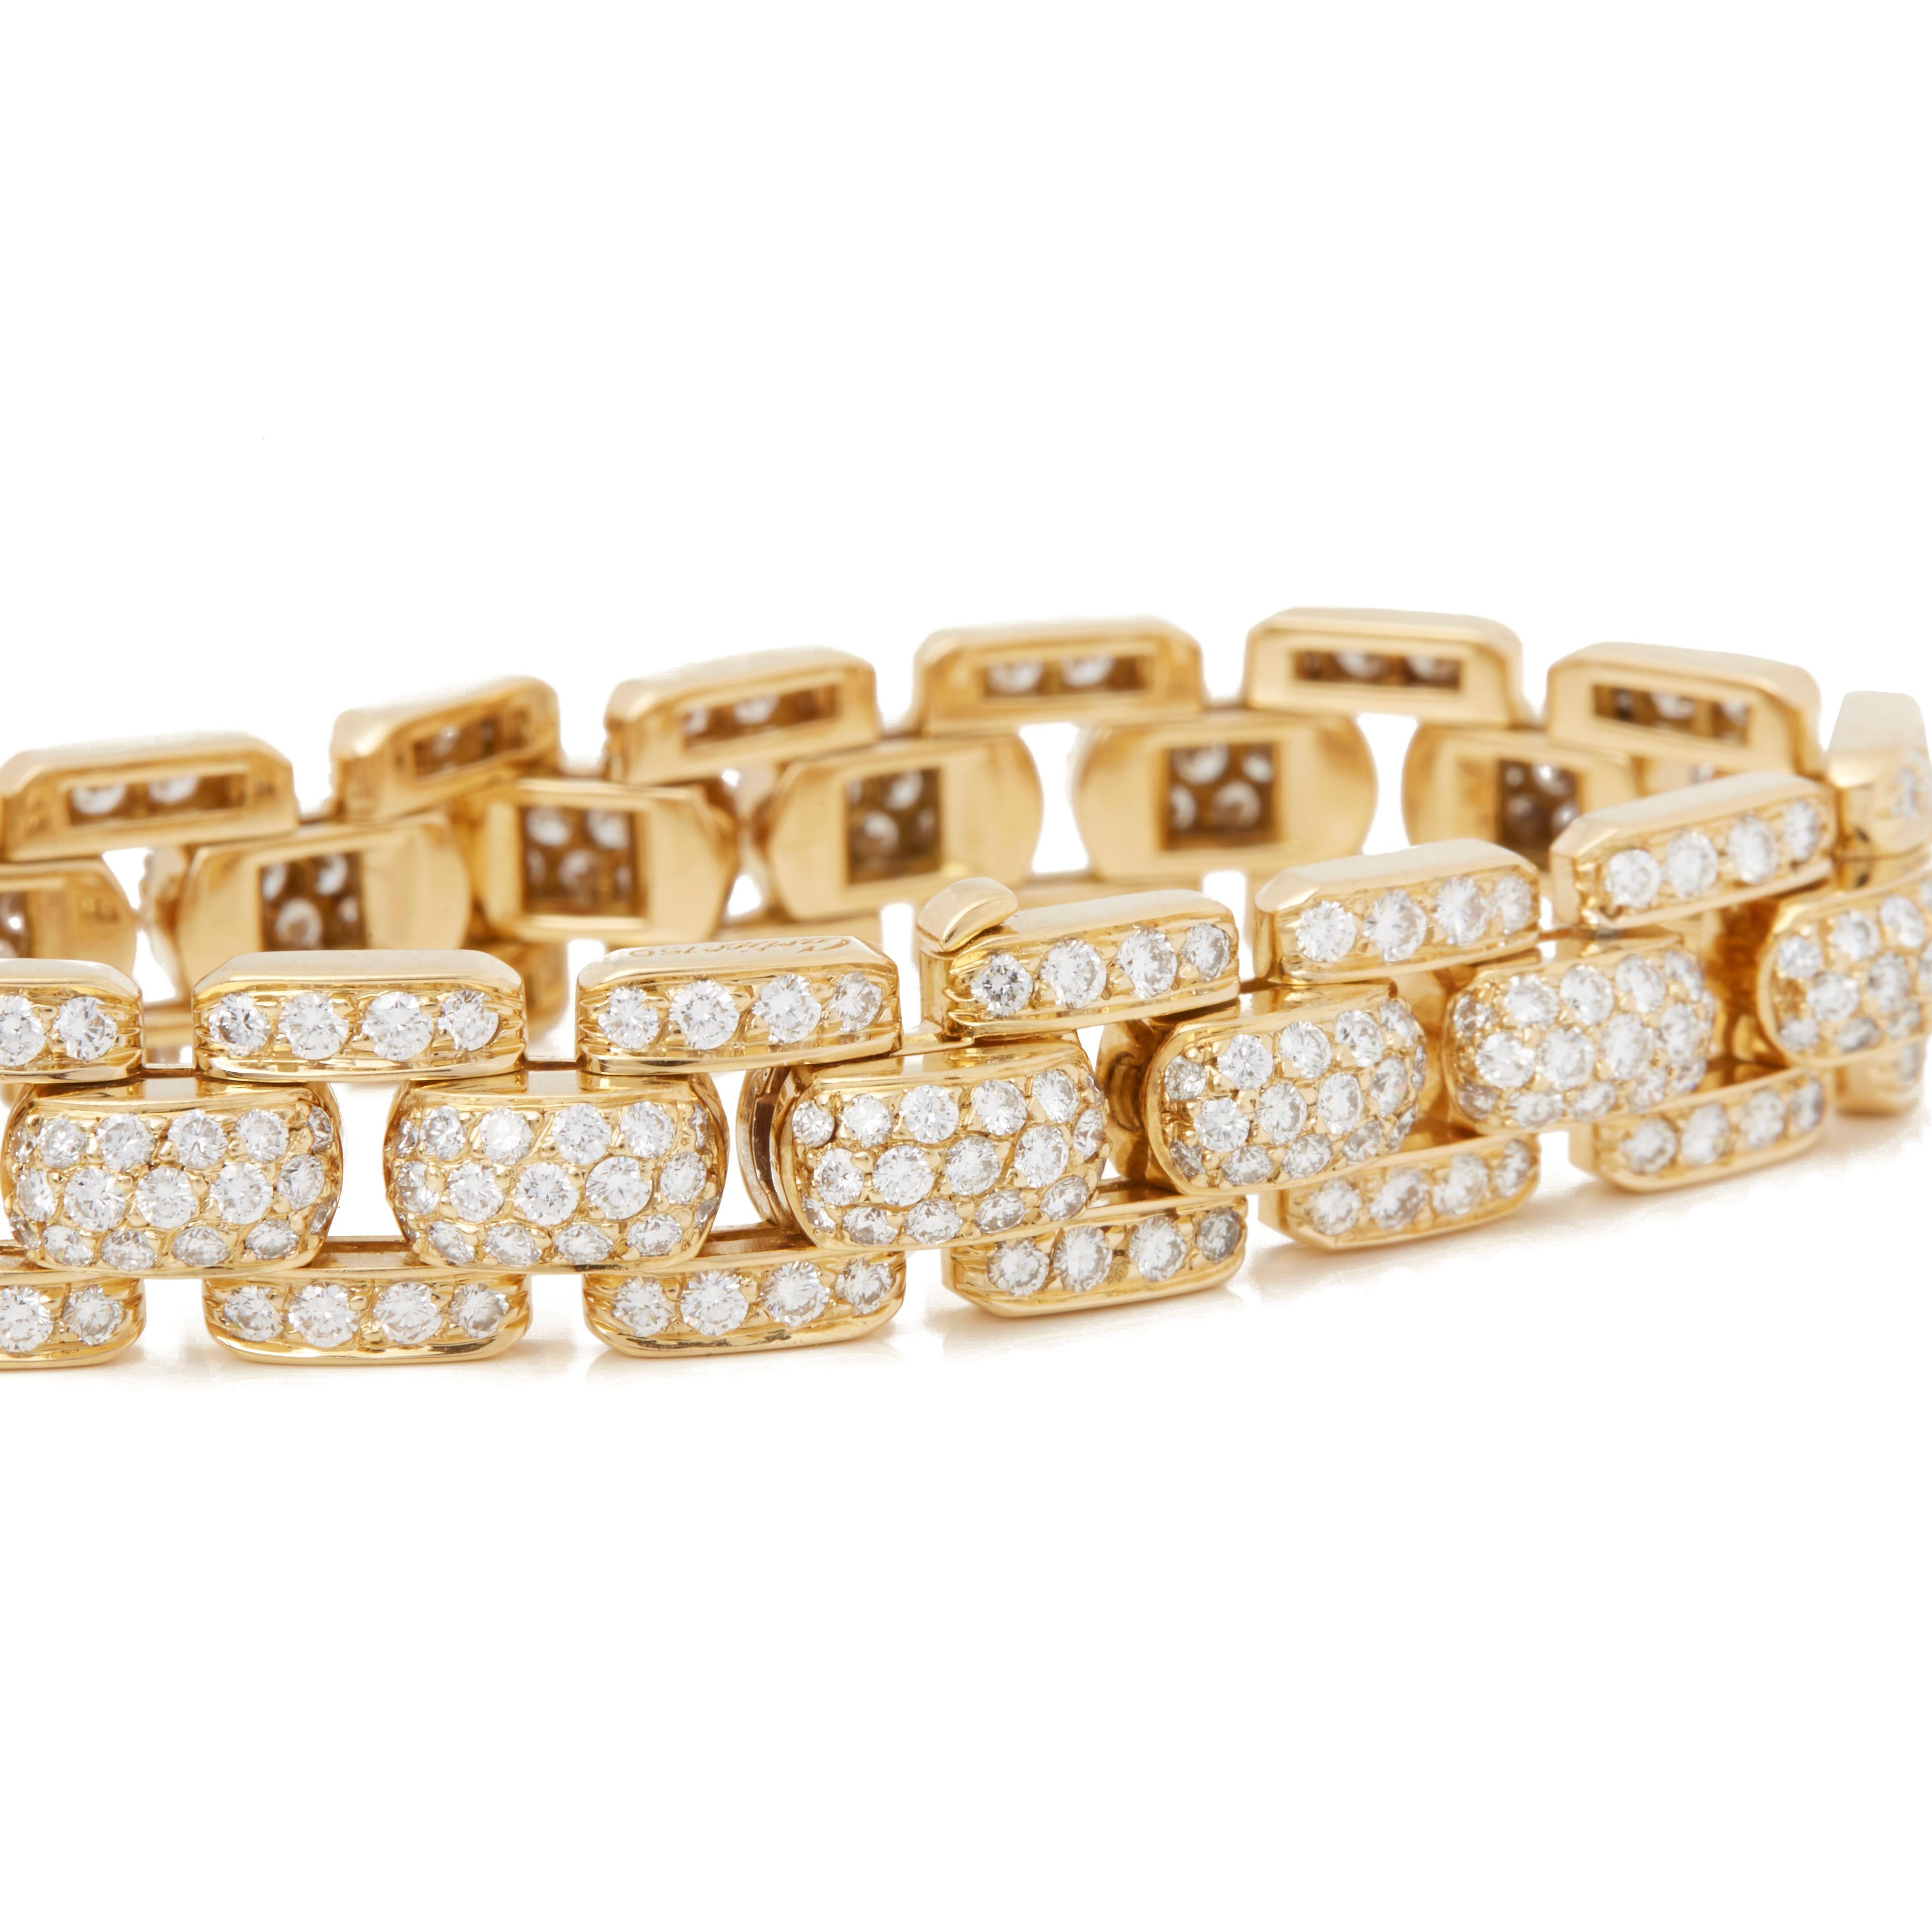 Code: COM2187
Brand: Cartier
Description: 18k Yellow Gold Diamond Link Bracelet
Accompanied With: Presentation Box
Gender: Ladies
Bracelet Length: 18.5cm
Bracelet Width: 1.1cm
Clasp Type: Push Button
Condition: 8.5
Material: Yellow Gold
Total